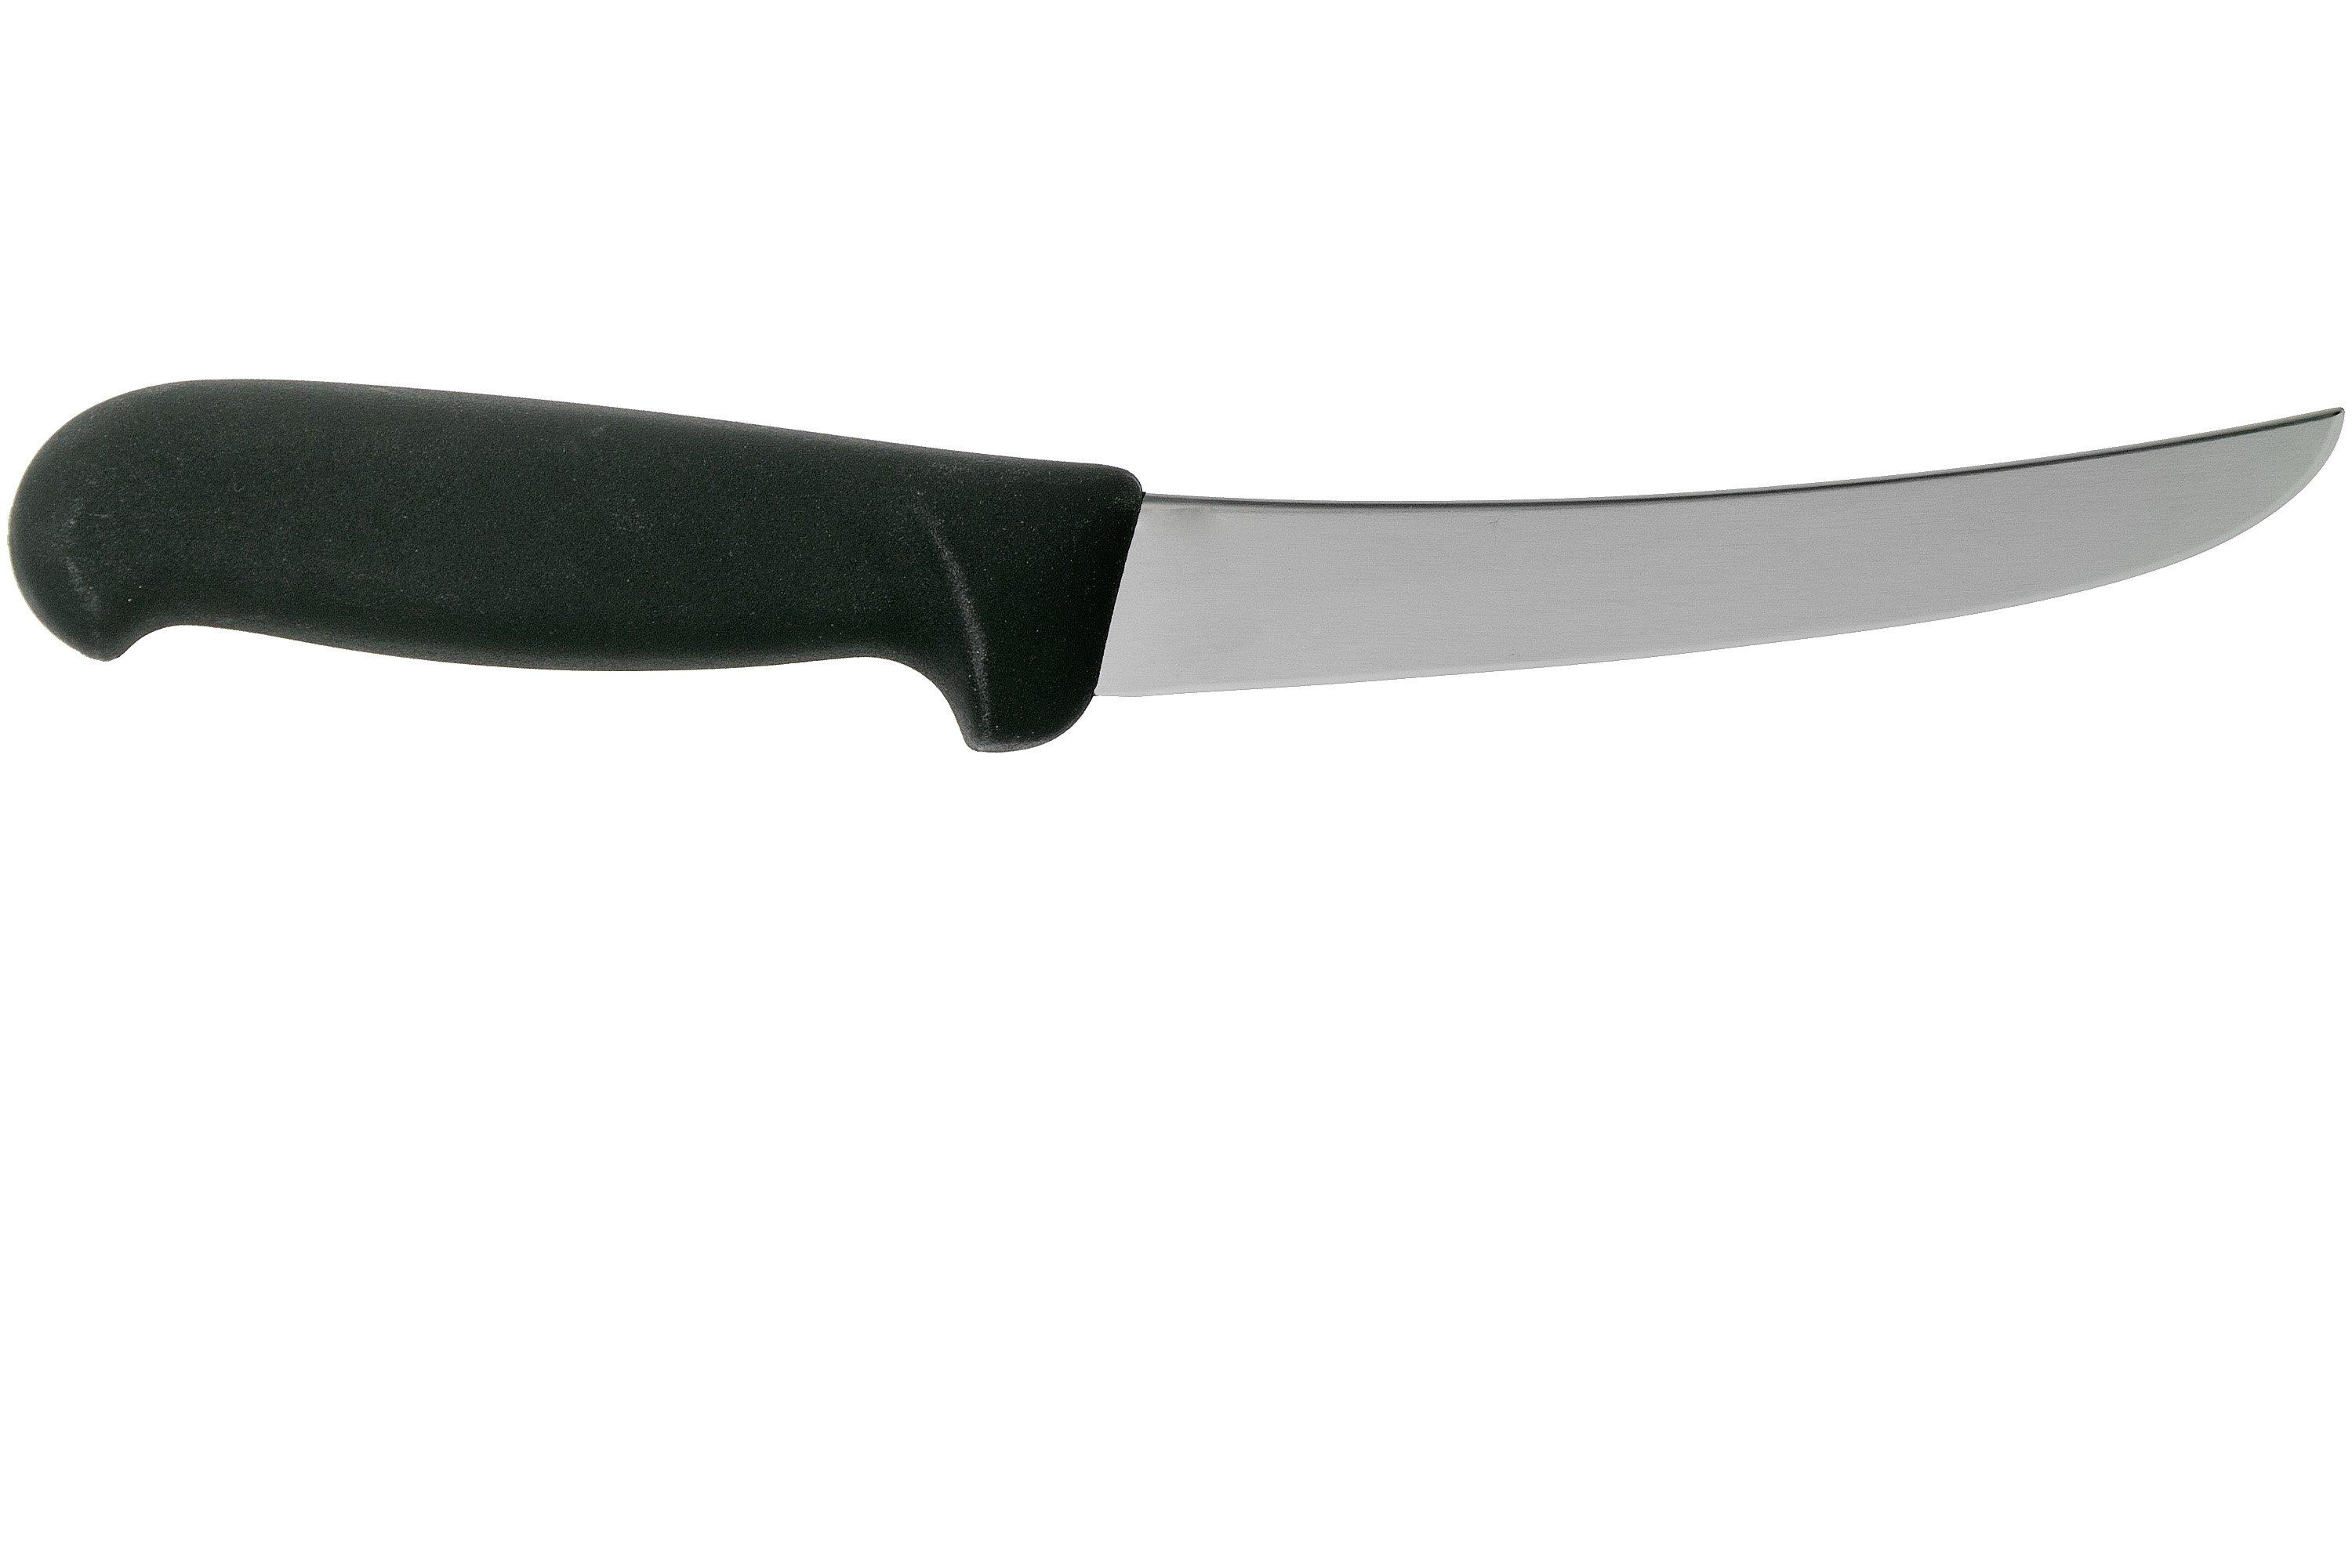 Victorinox Fibrox Boning Knife 15 Cm 5 6503 15 Advantageously Shopping At Knivesandtools Dk